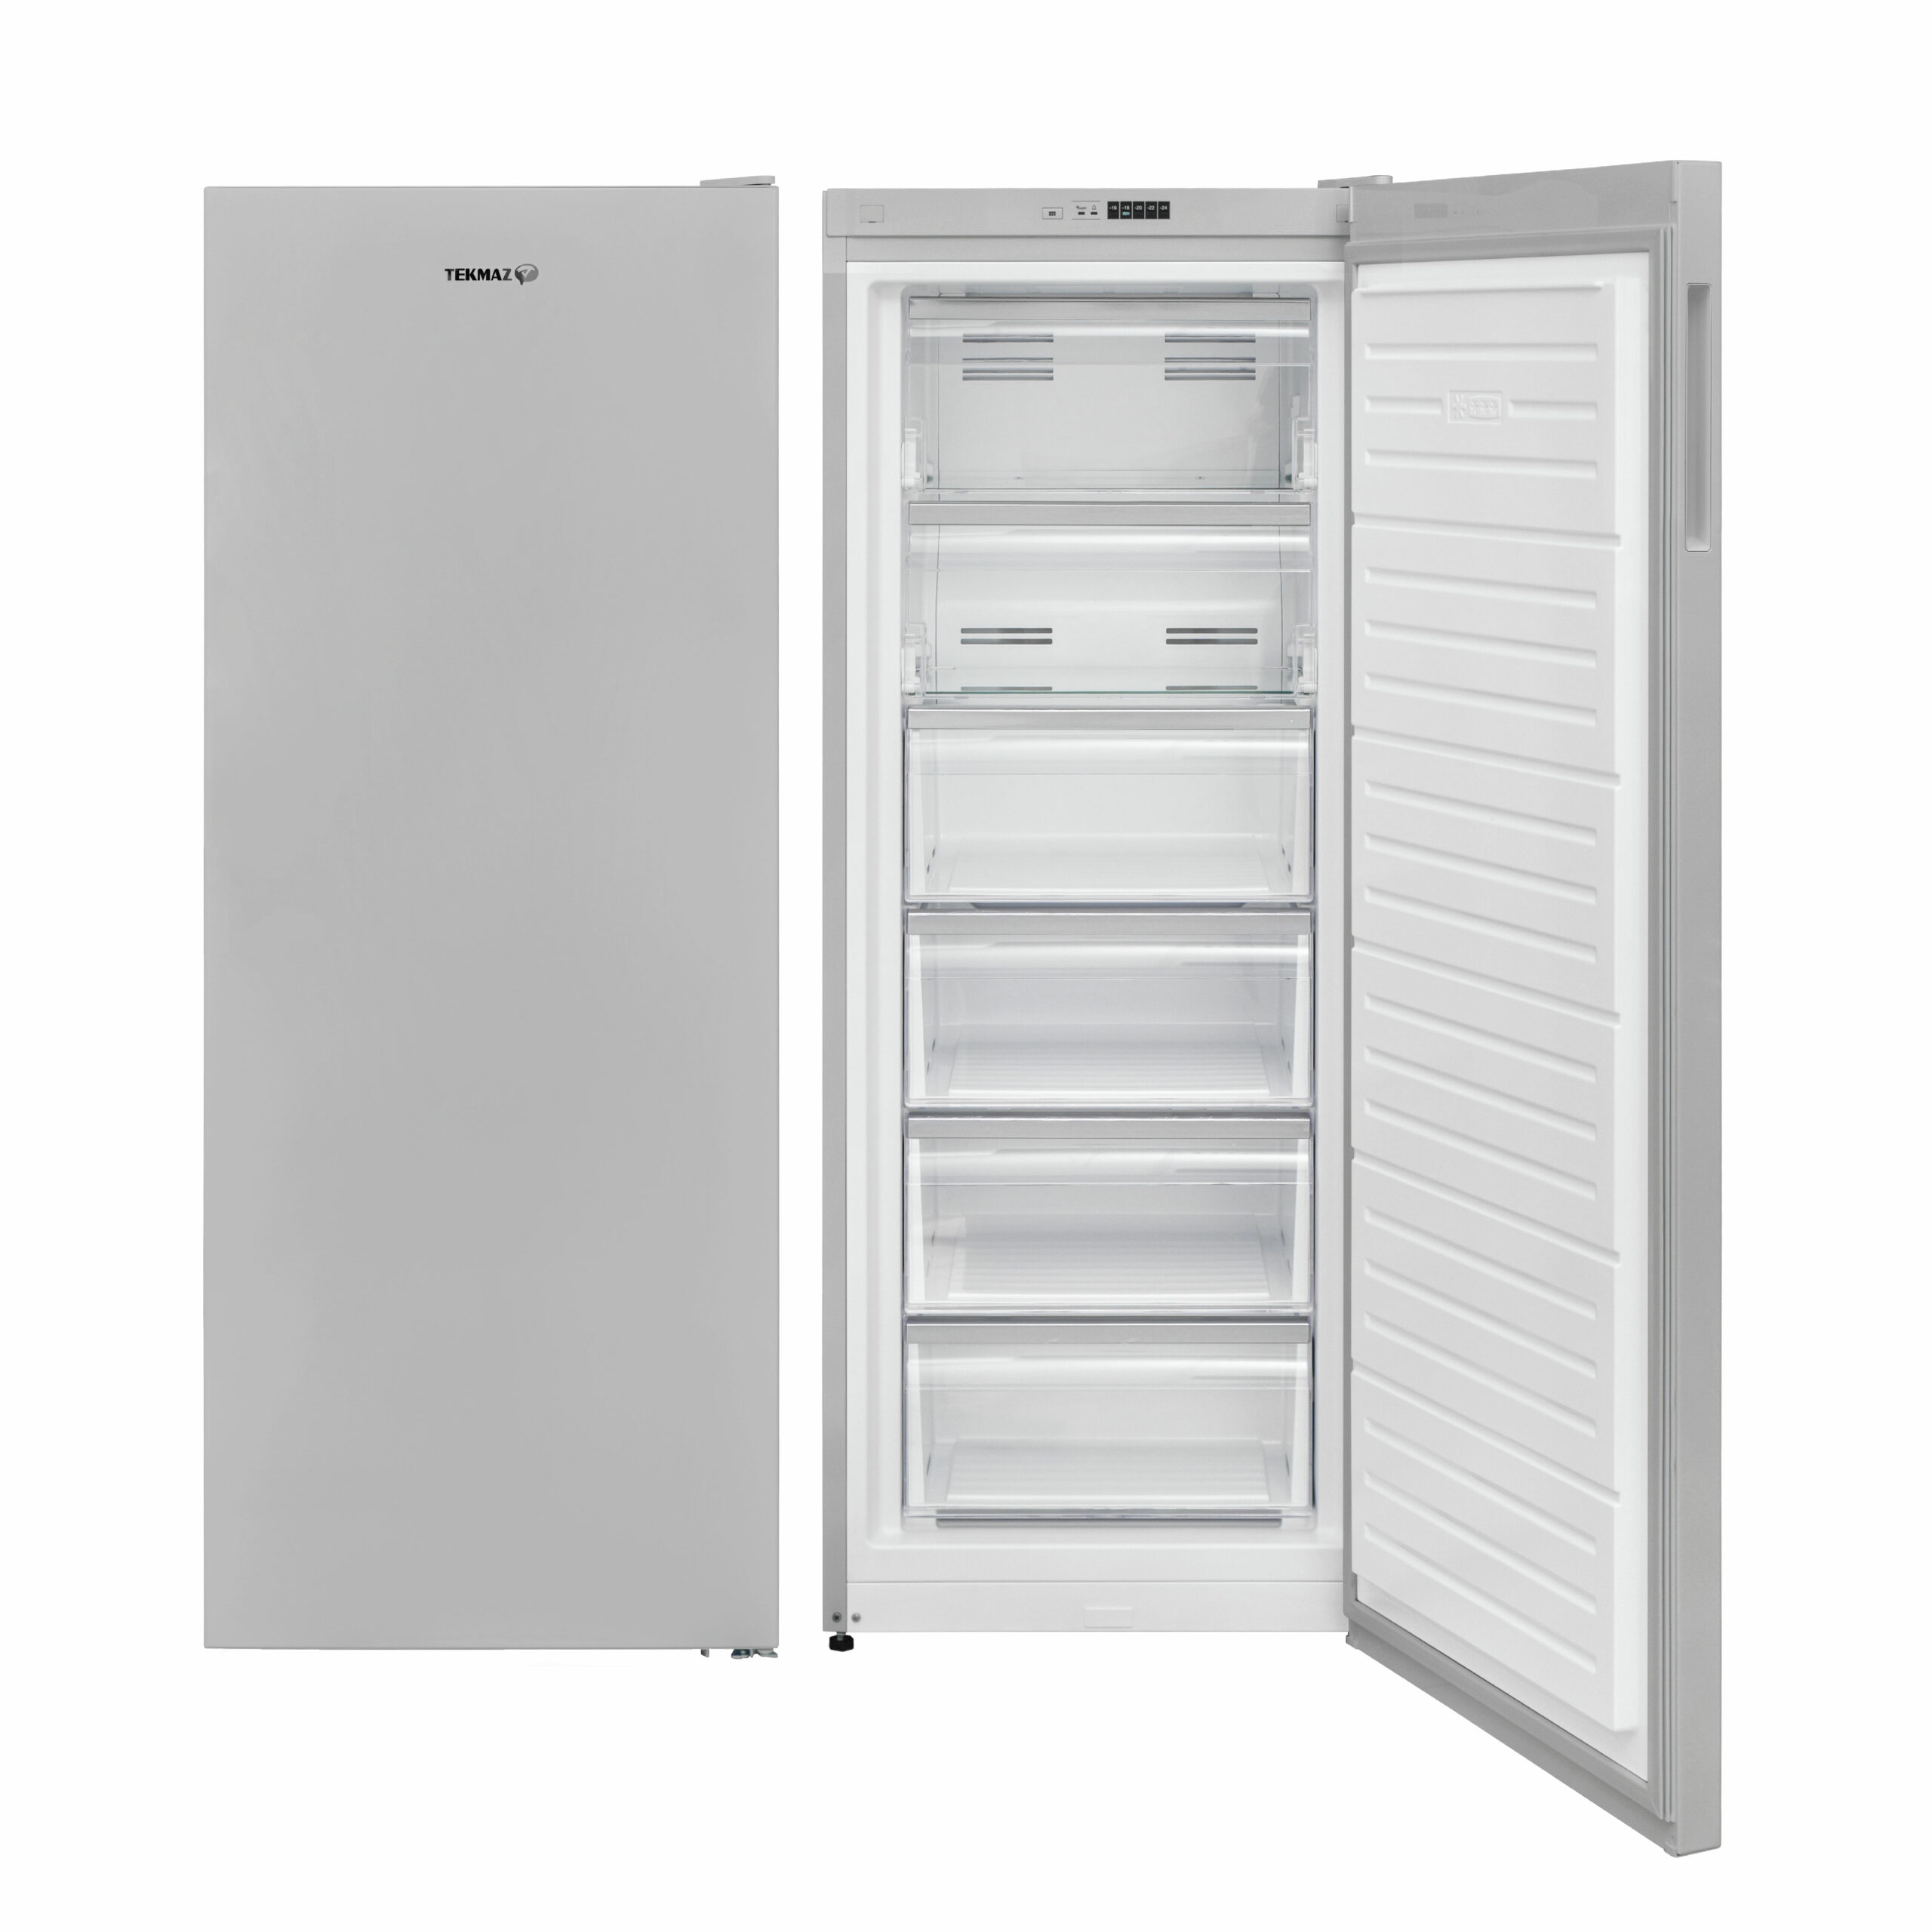 Tekmaz Upright freezer with 6 drawers, stainless steel